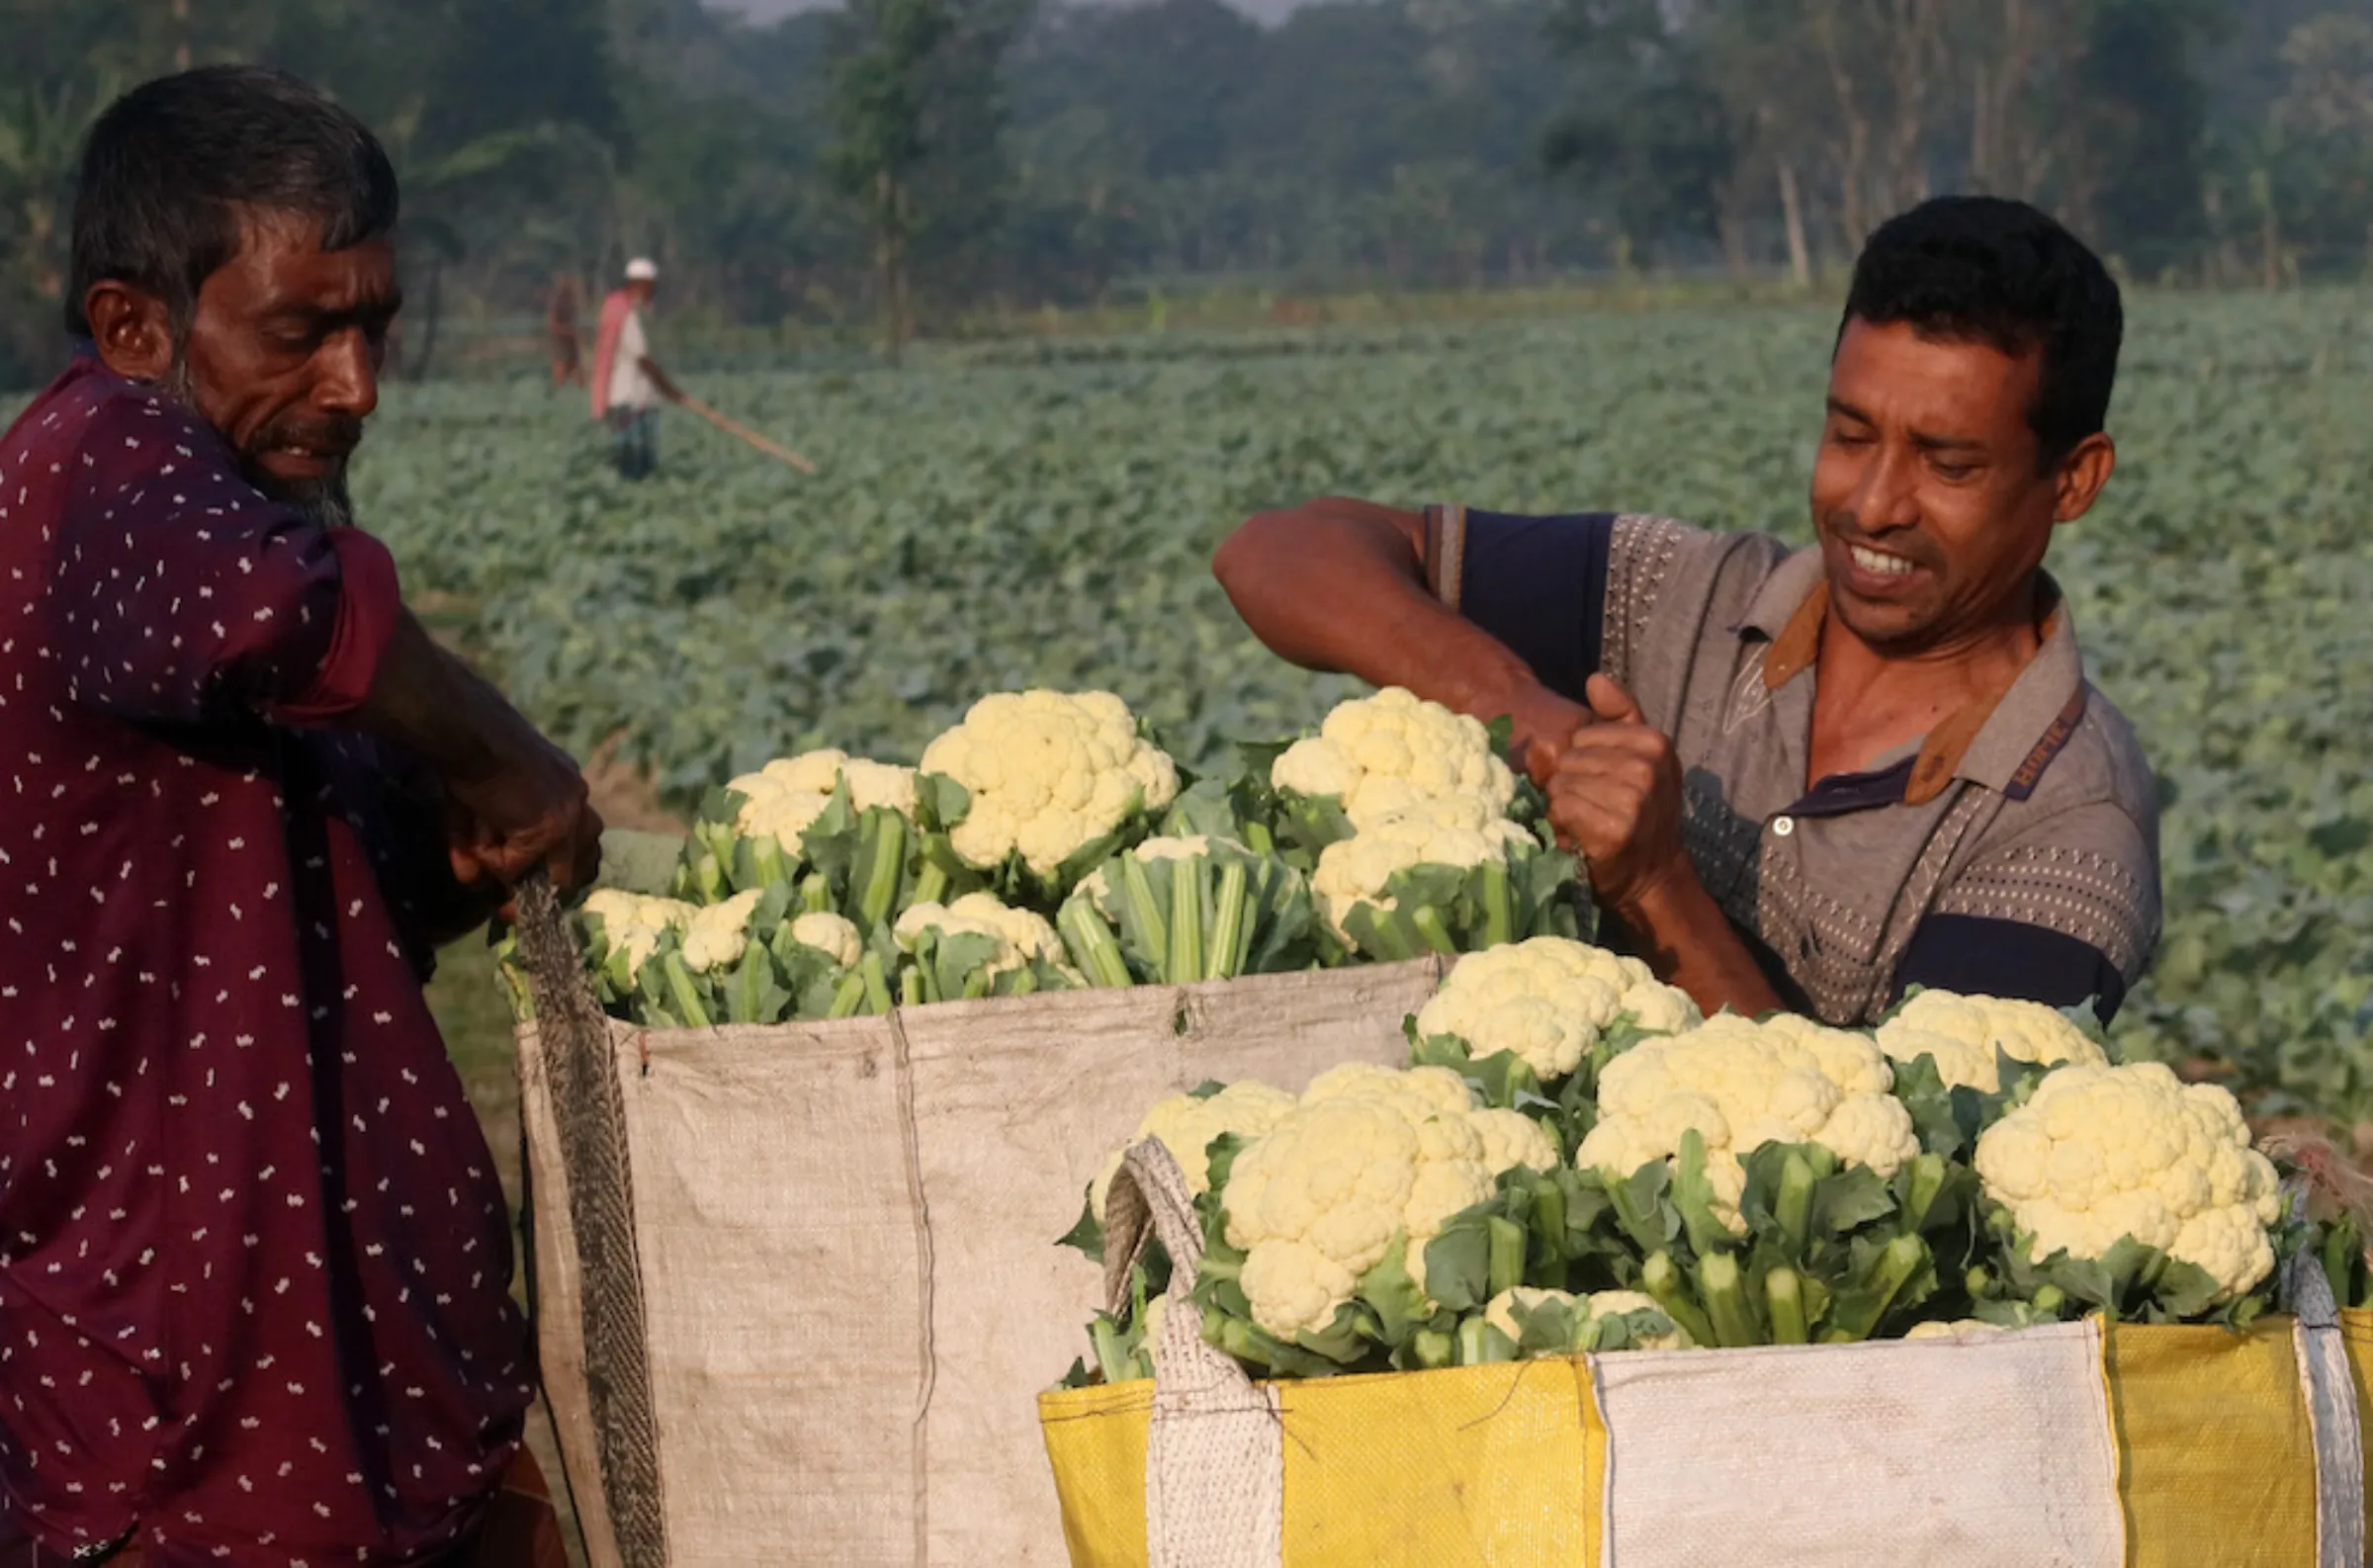 Farmers Hafiz and Motaleb pack up their cauliflower to take to market, in Rajshahi, Bangladesh, October 28, 2022